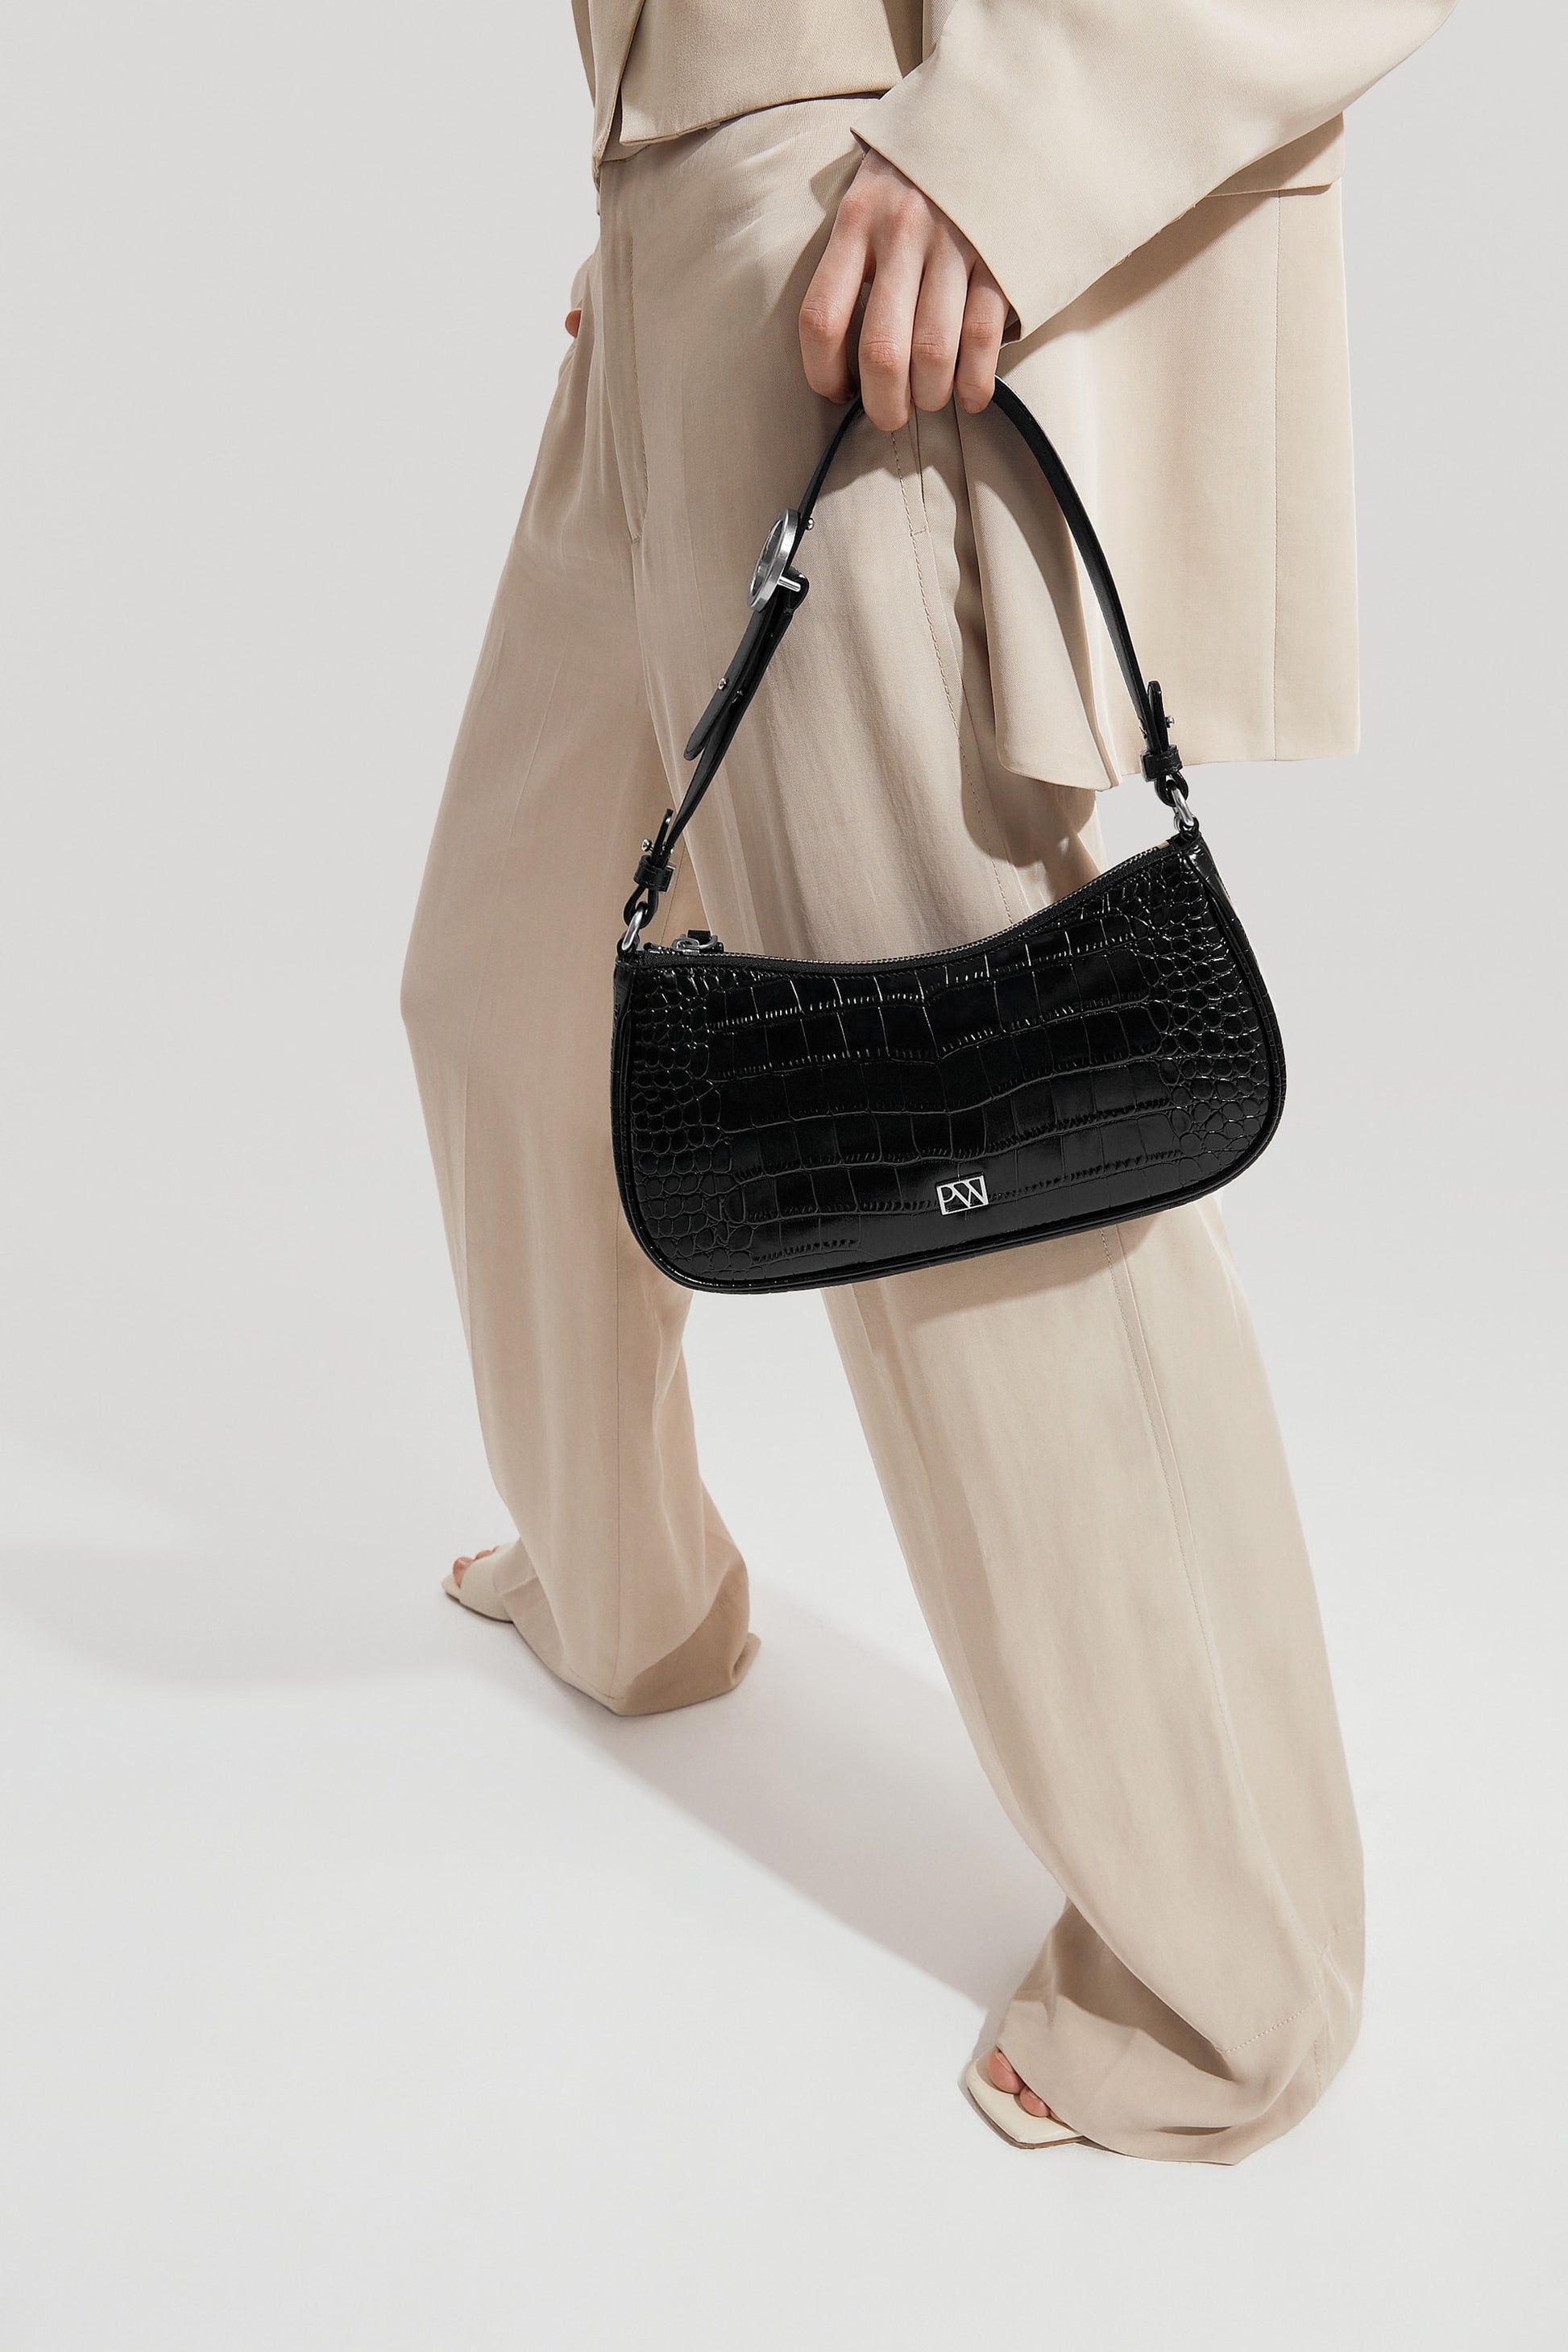 JW PEI Women's Eva Shoulder Handbag